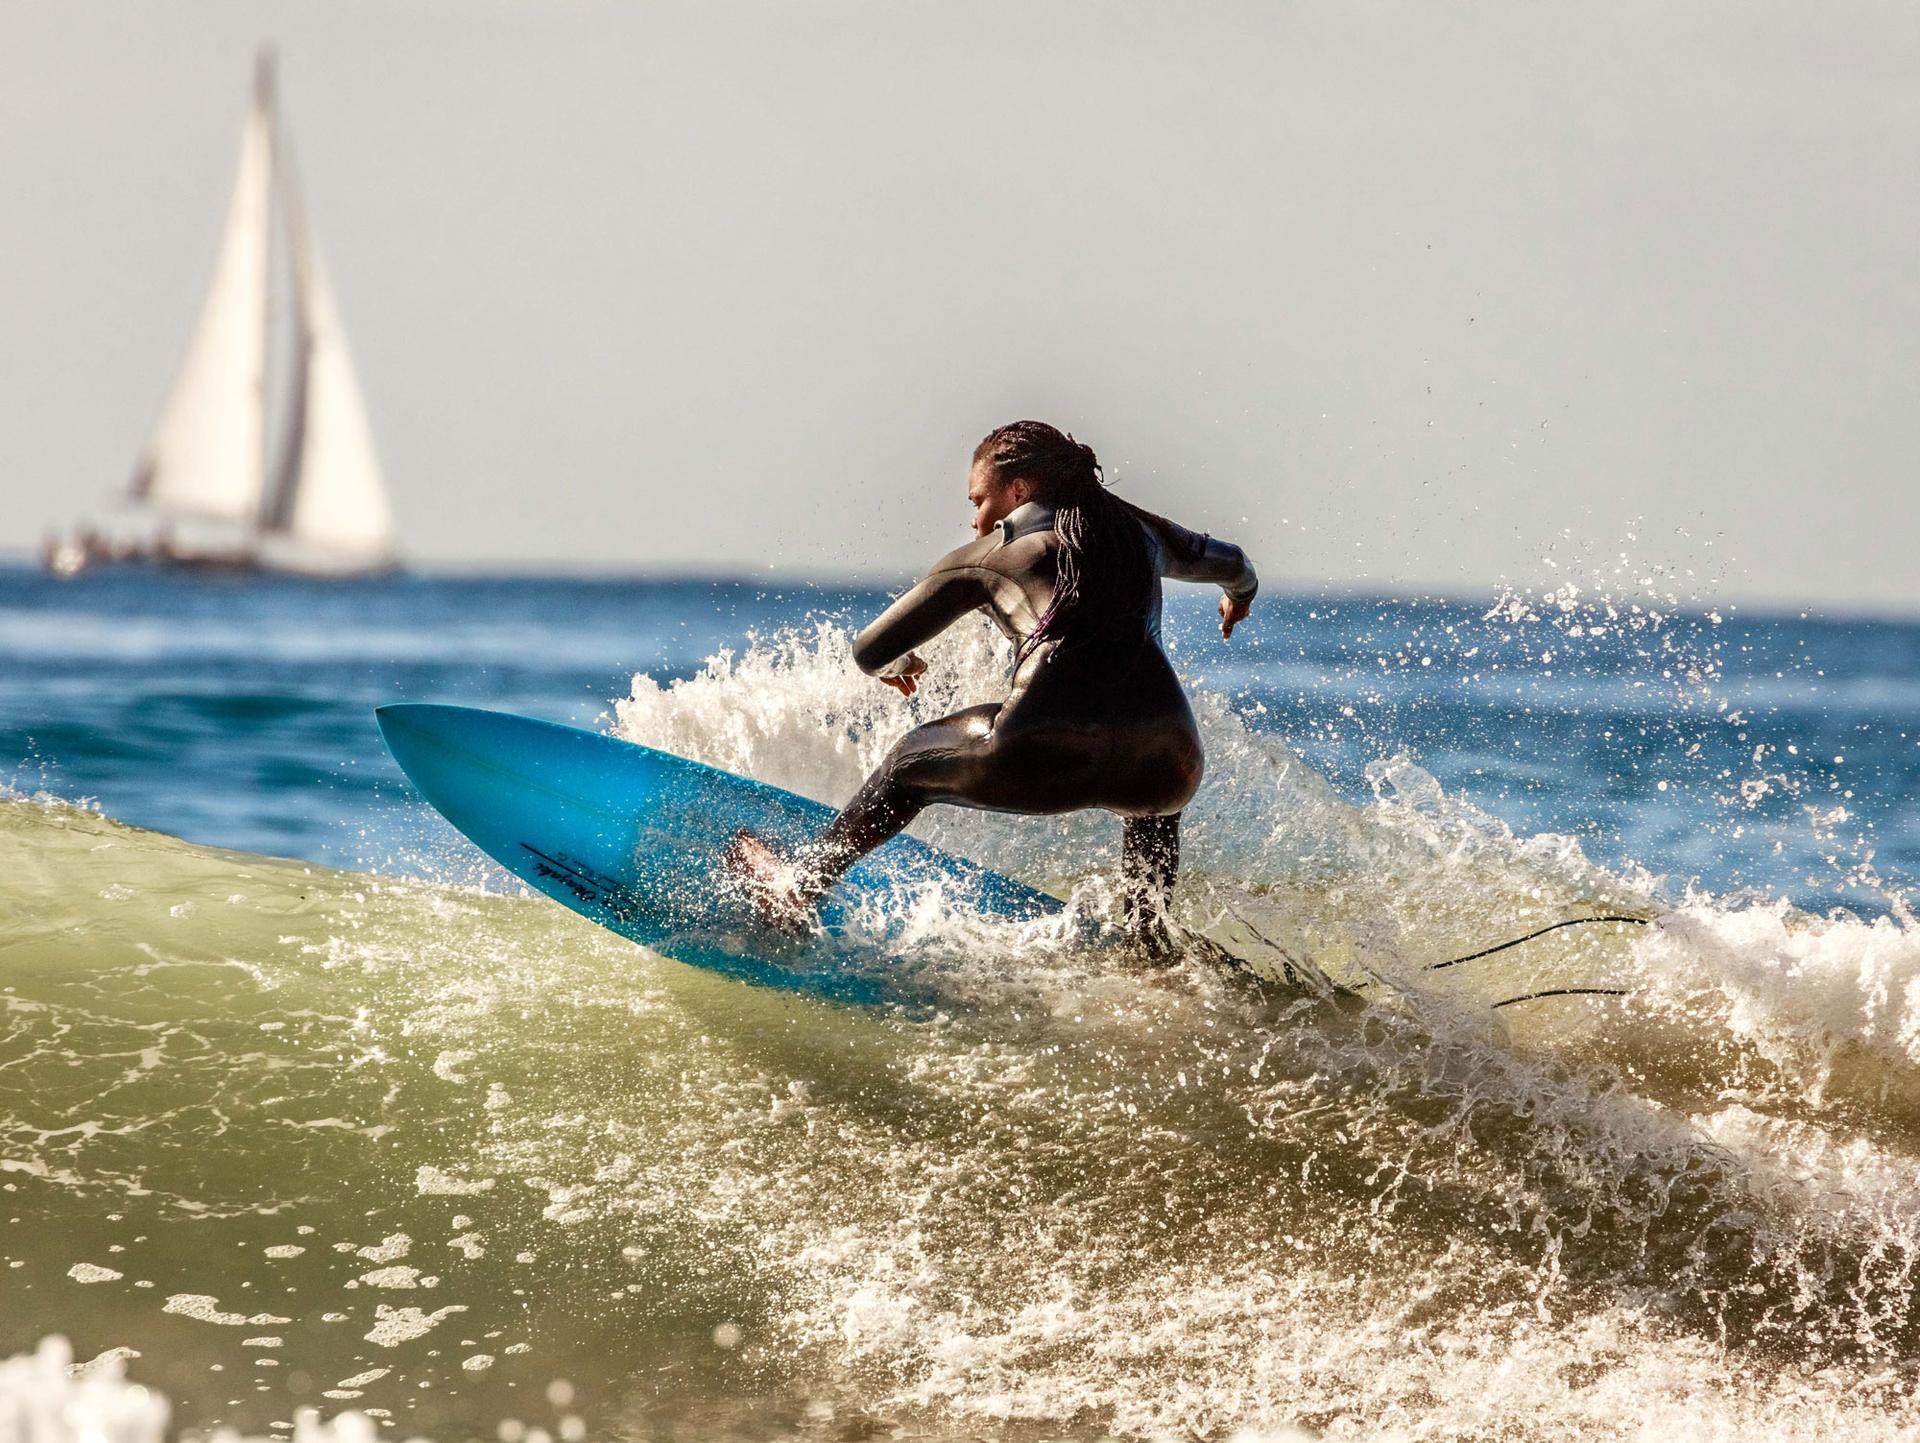 A woman riding a wave